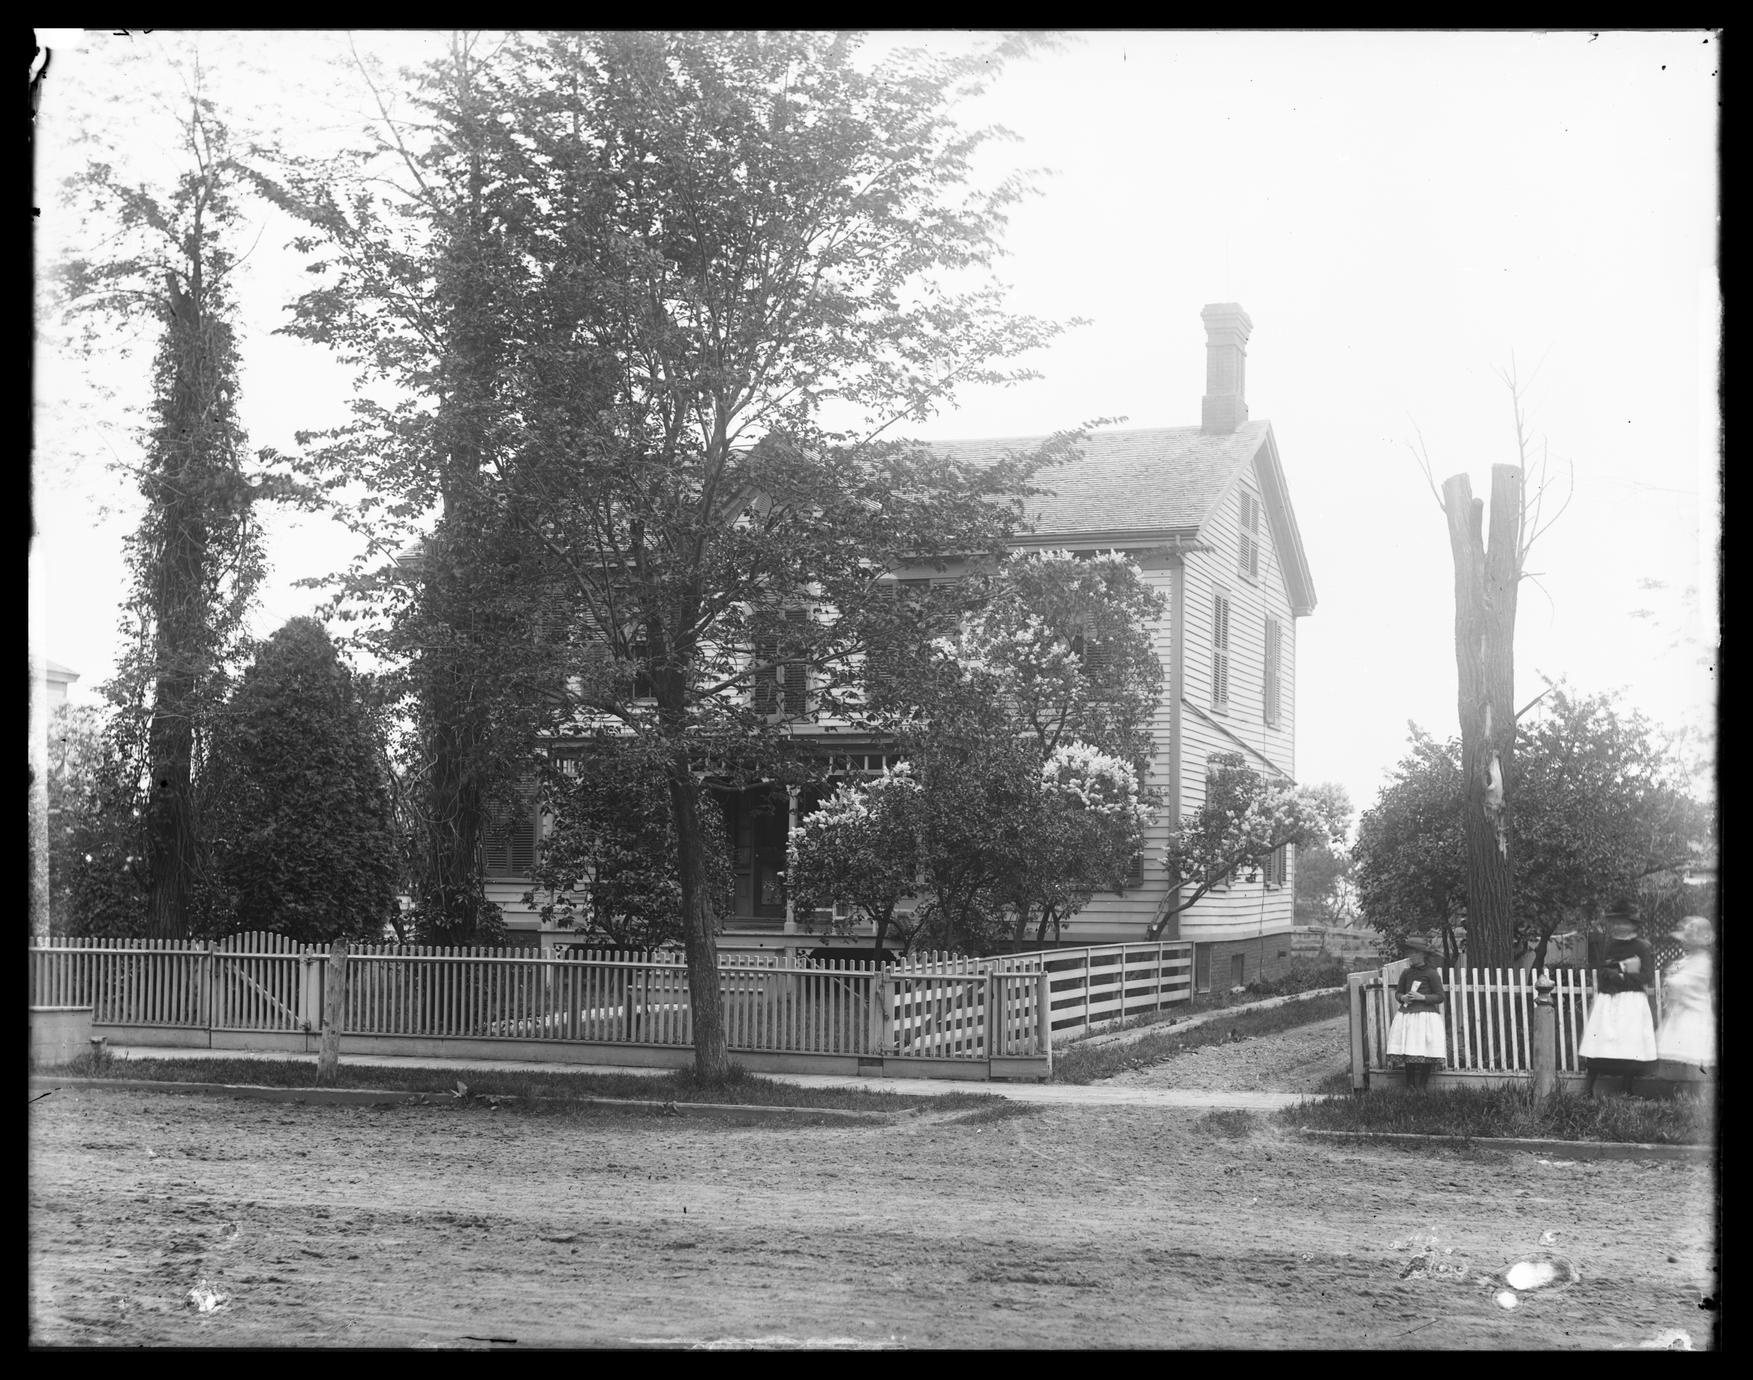 Home of Rev. Reuben Deming - Underground Railroad station